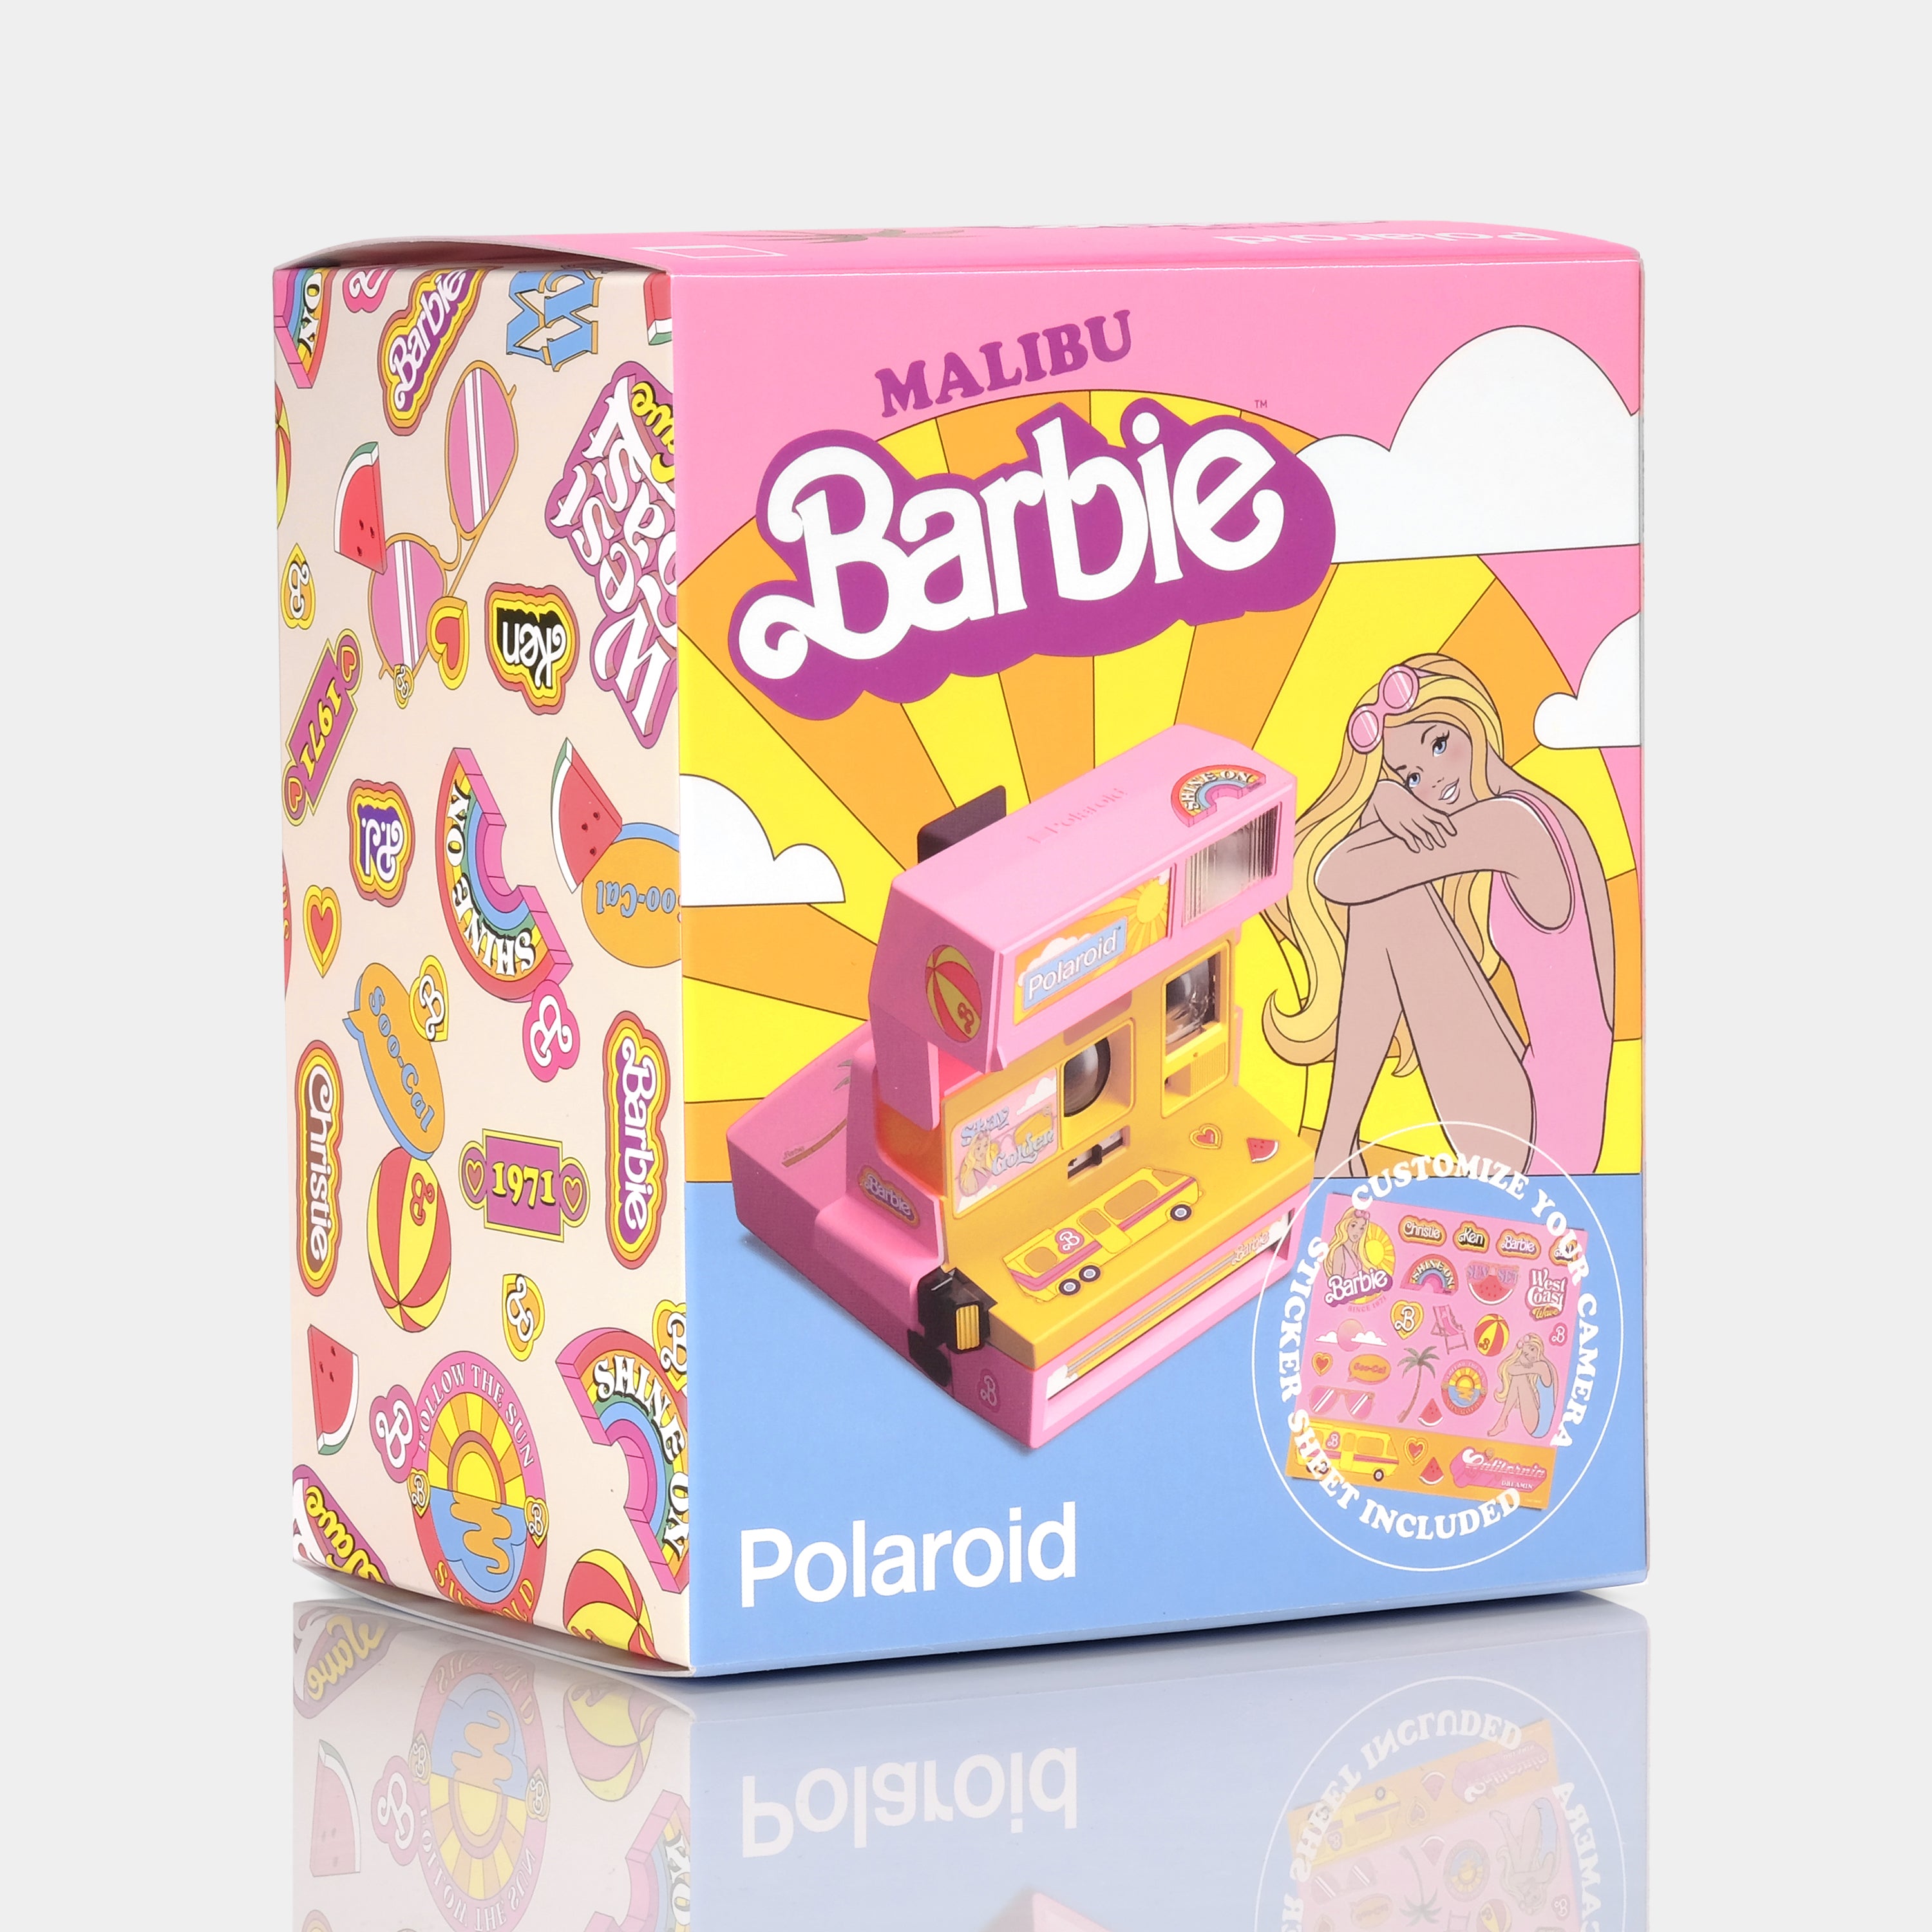 Polaroid 600 Camera - Malibu Barbie Edition - image 3 of 8